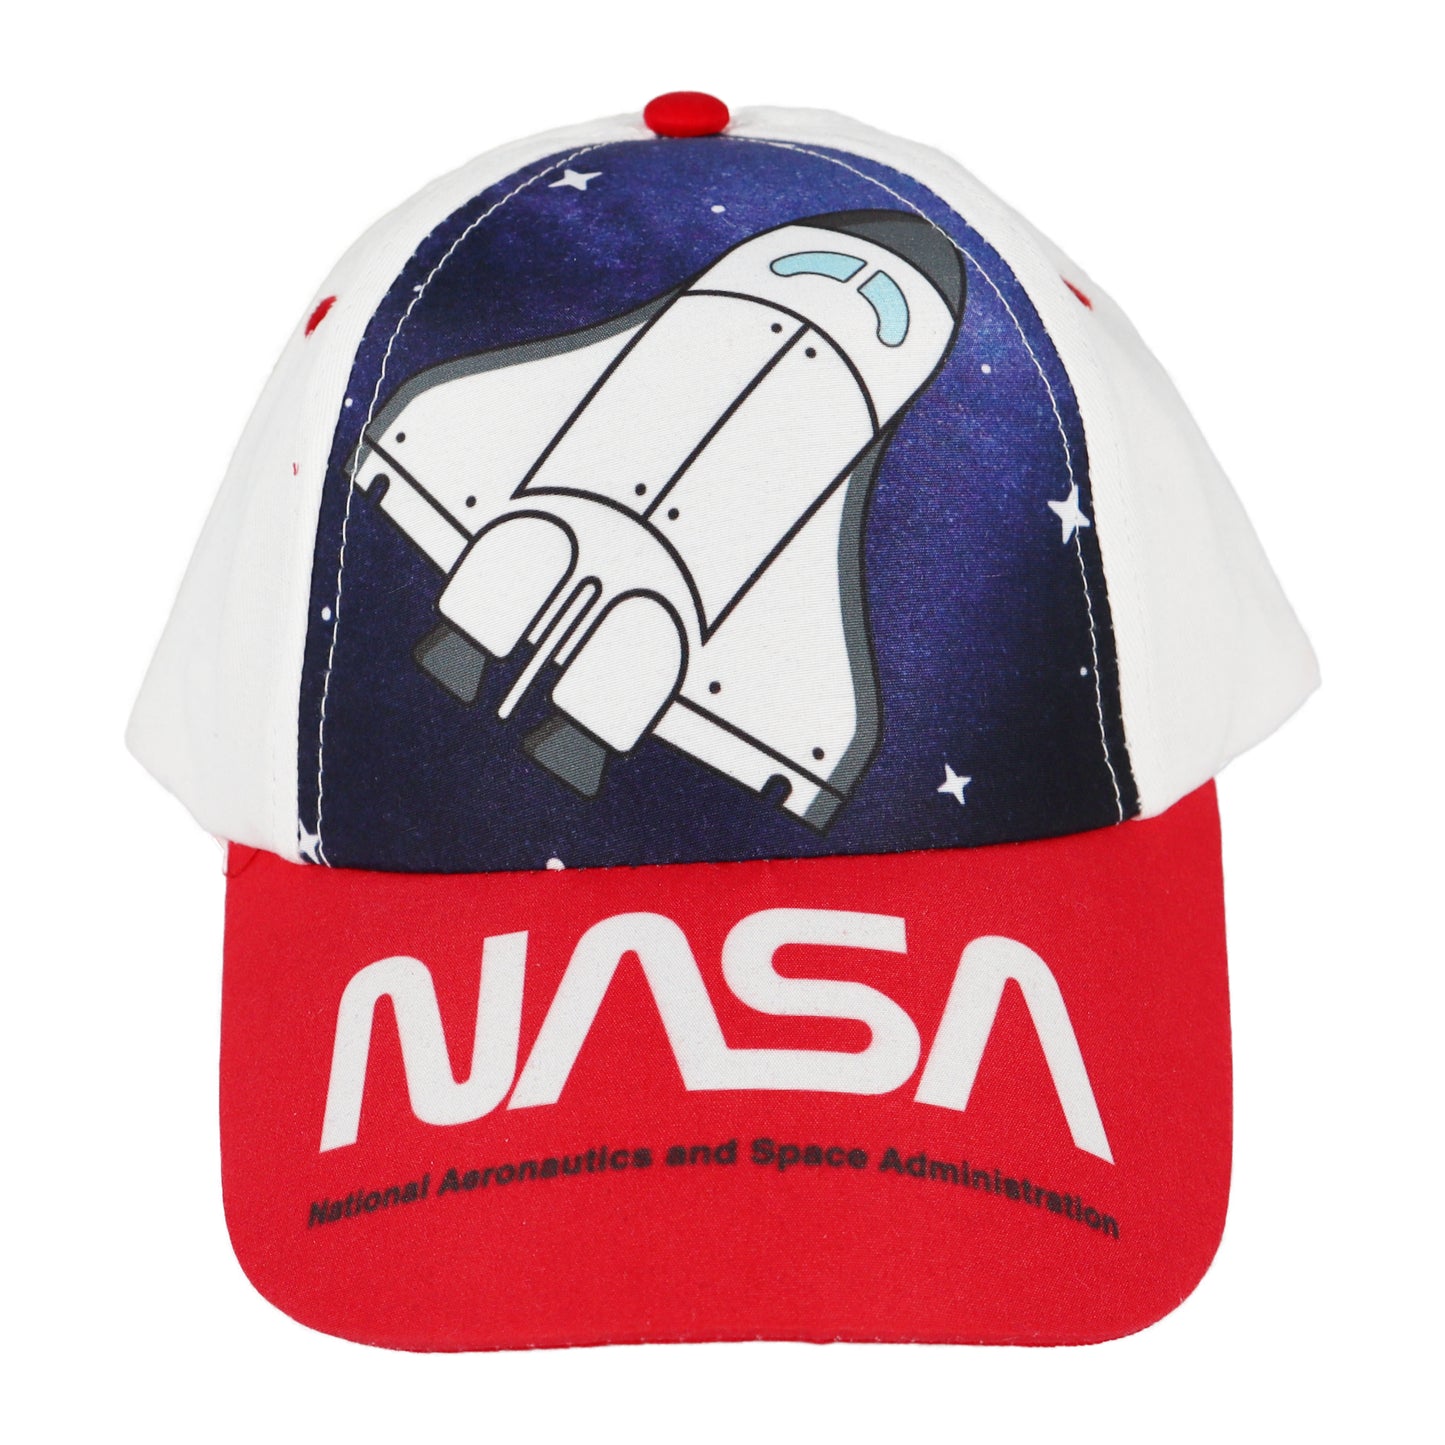 NASA Space Kinder Jungen Basecap Baseball Kappe Mütze